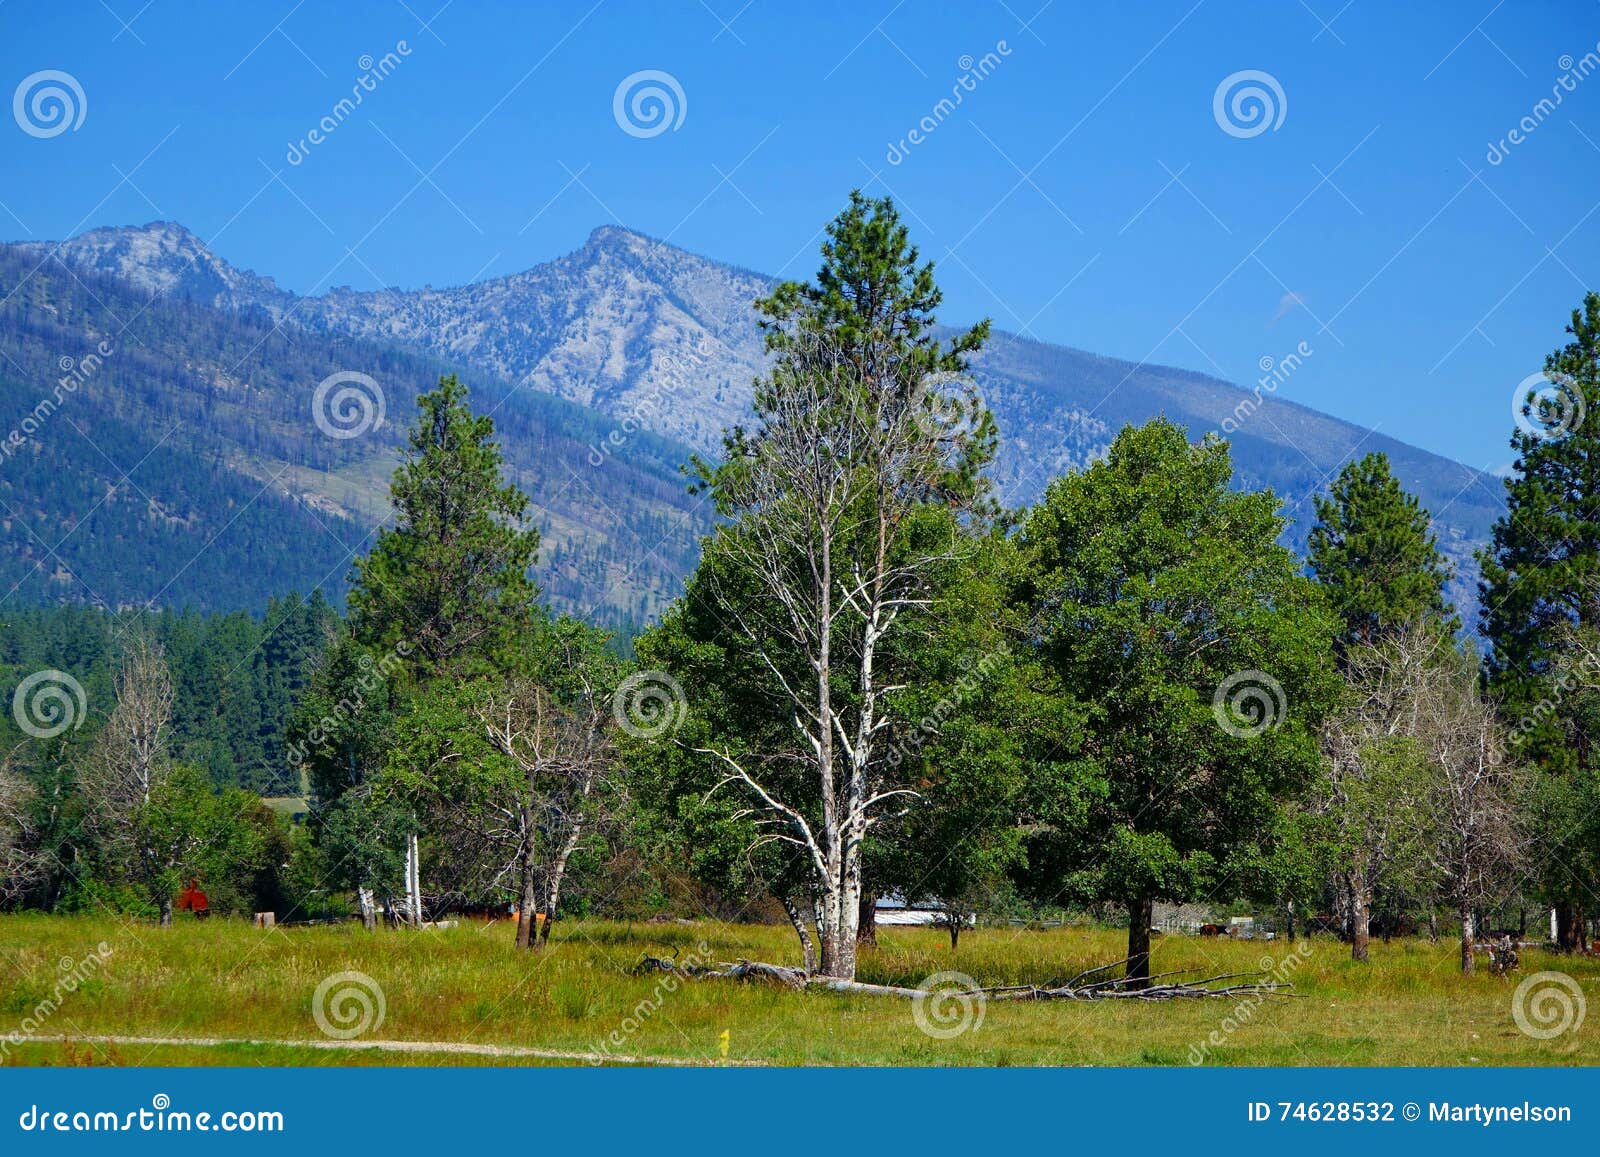 bitterroot mountains - montana